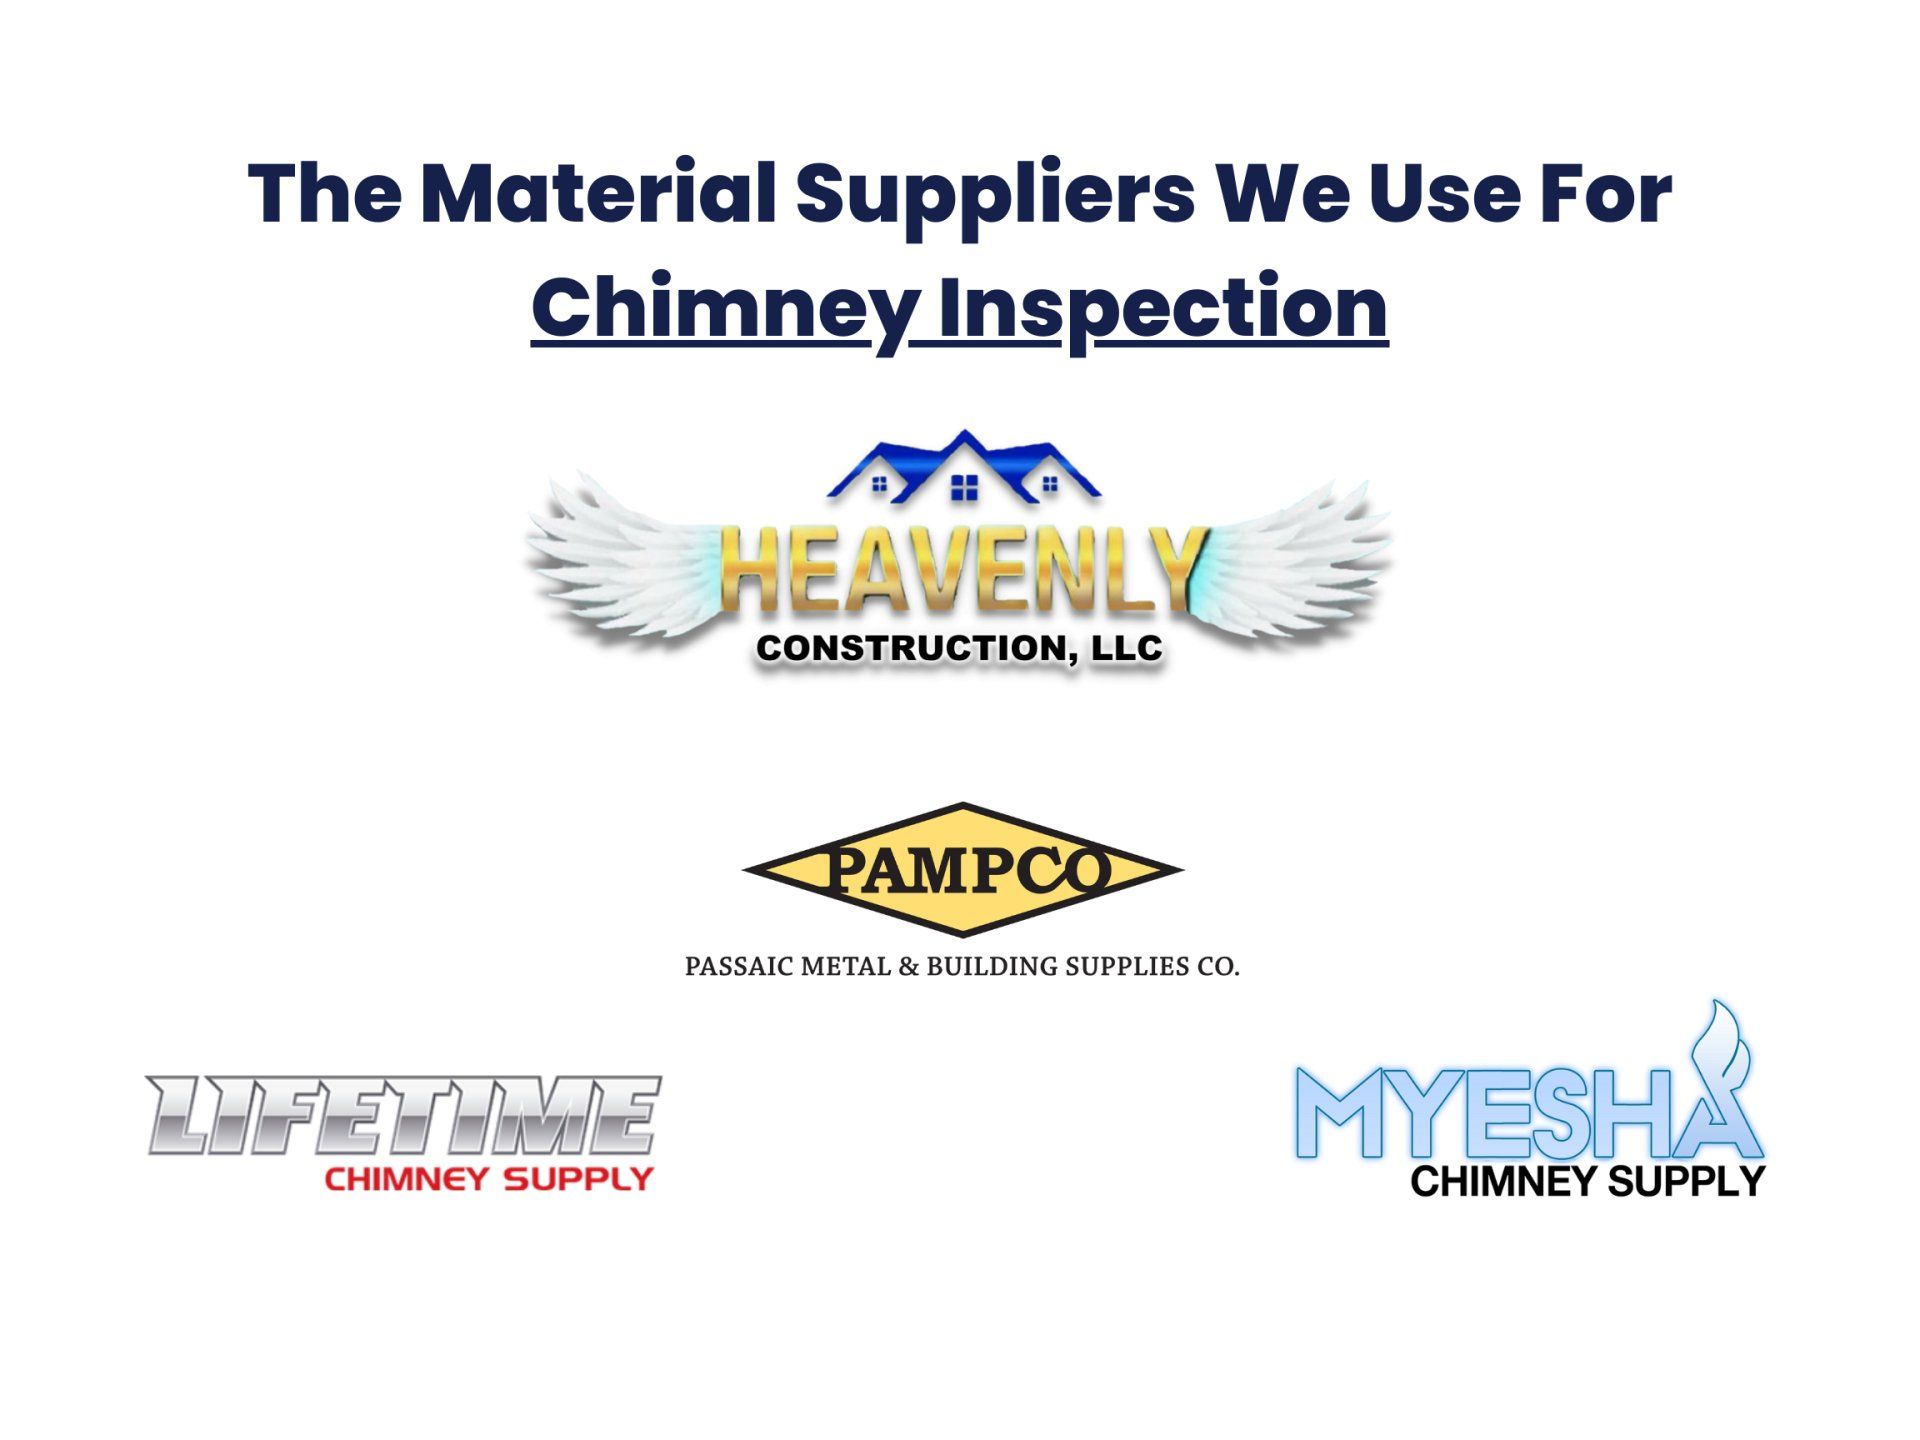 Lifetime Chimney Supply, Pampco Passaic Metal & Building Supplies Co. & Myesha Chimney Supply logos.